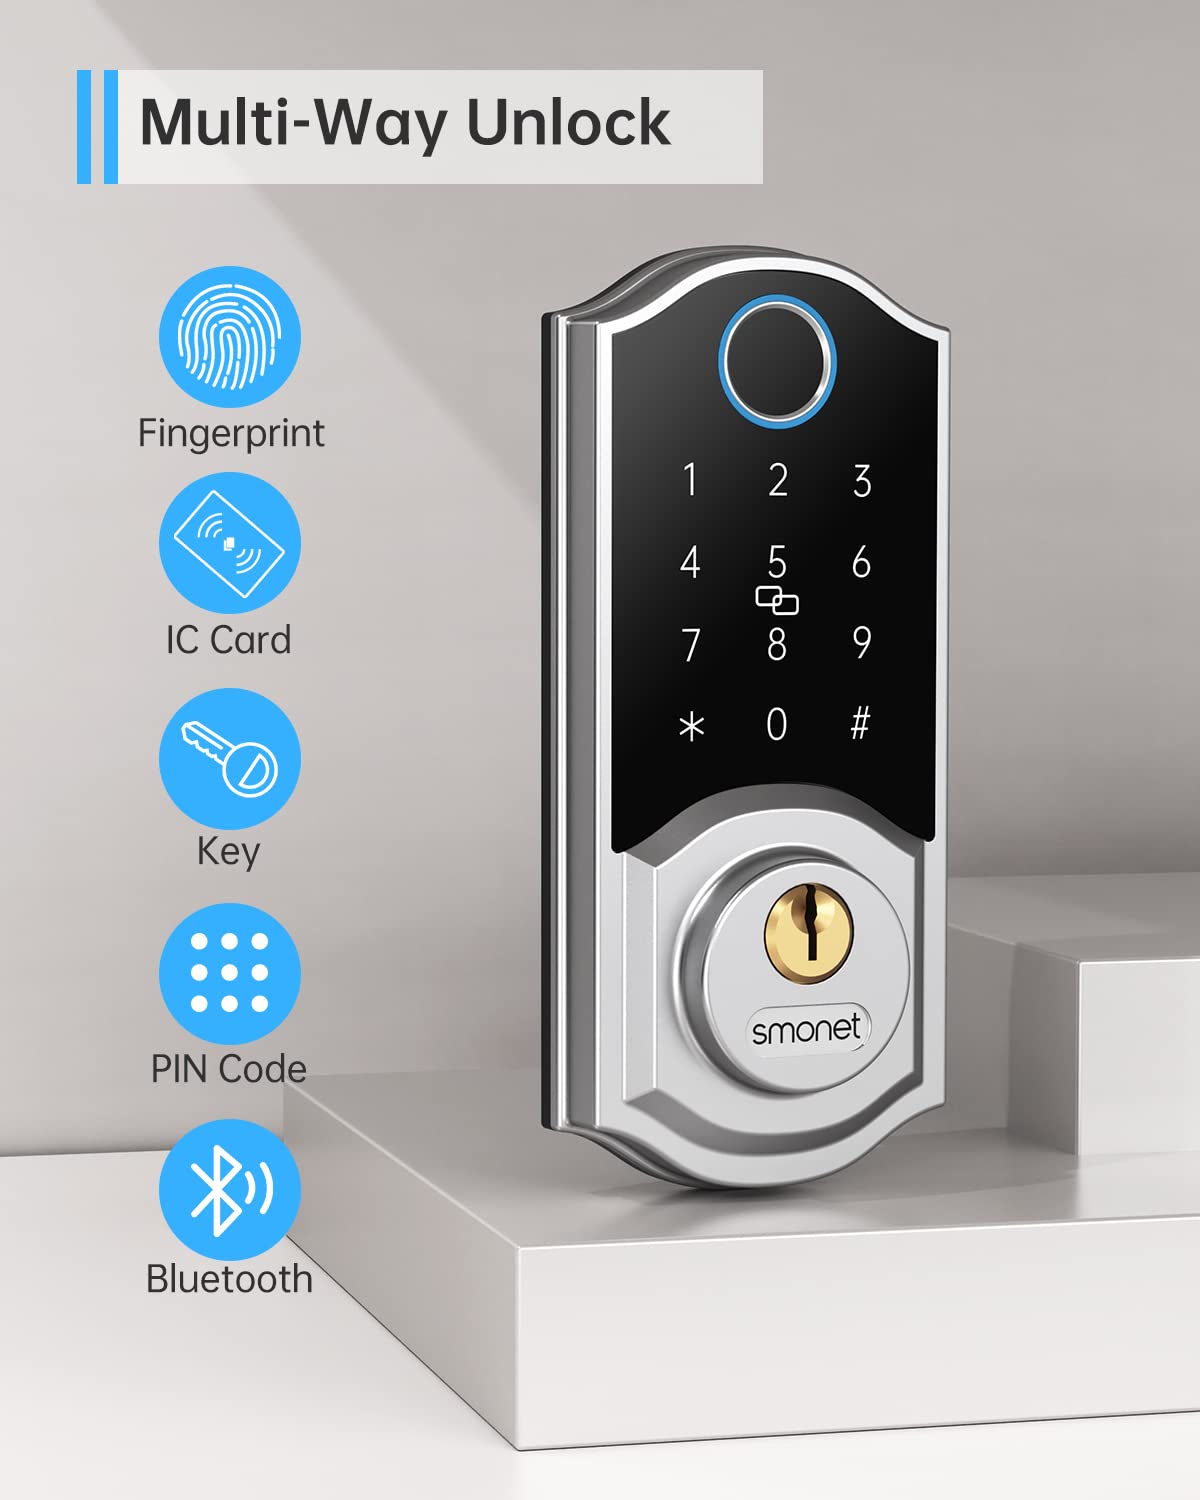 Multi-way unlock smart lock